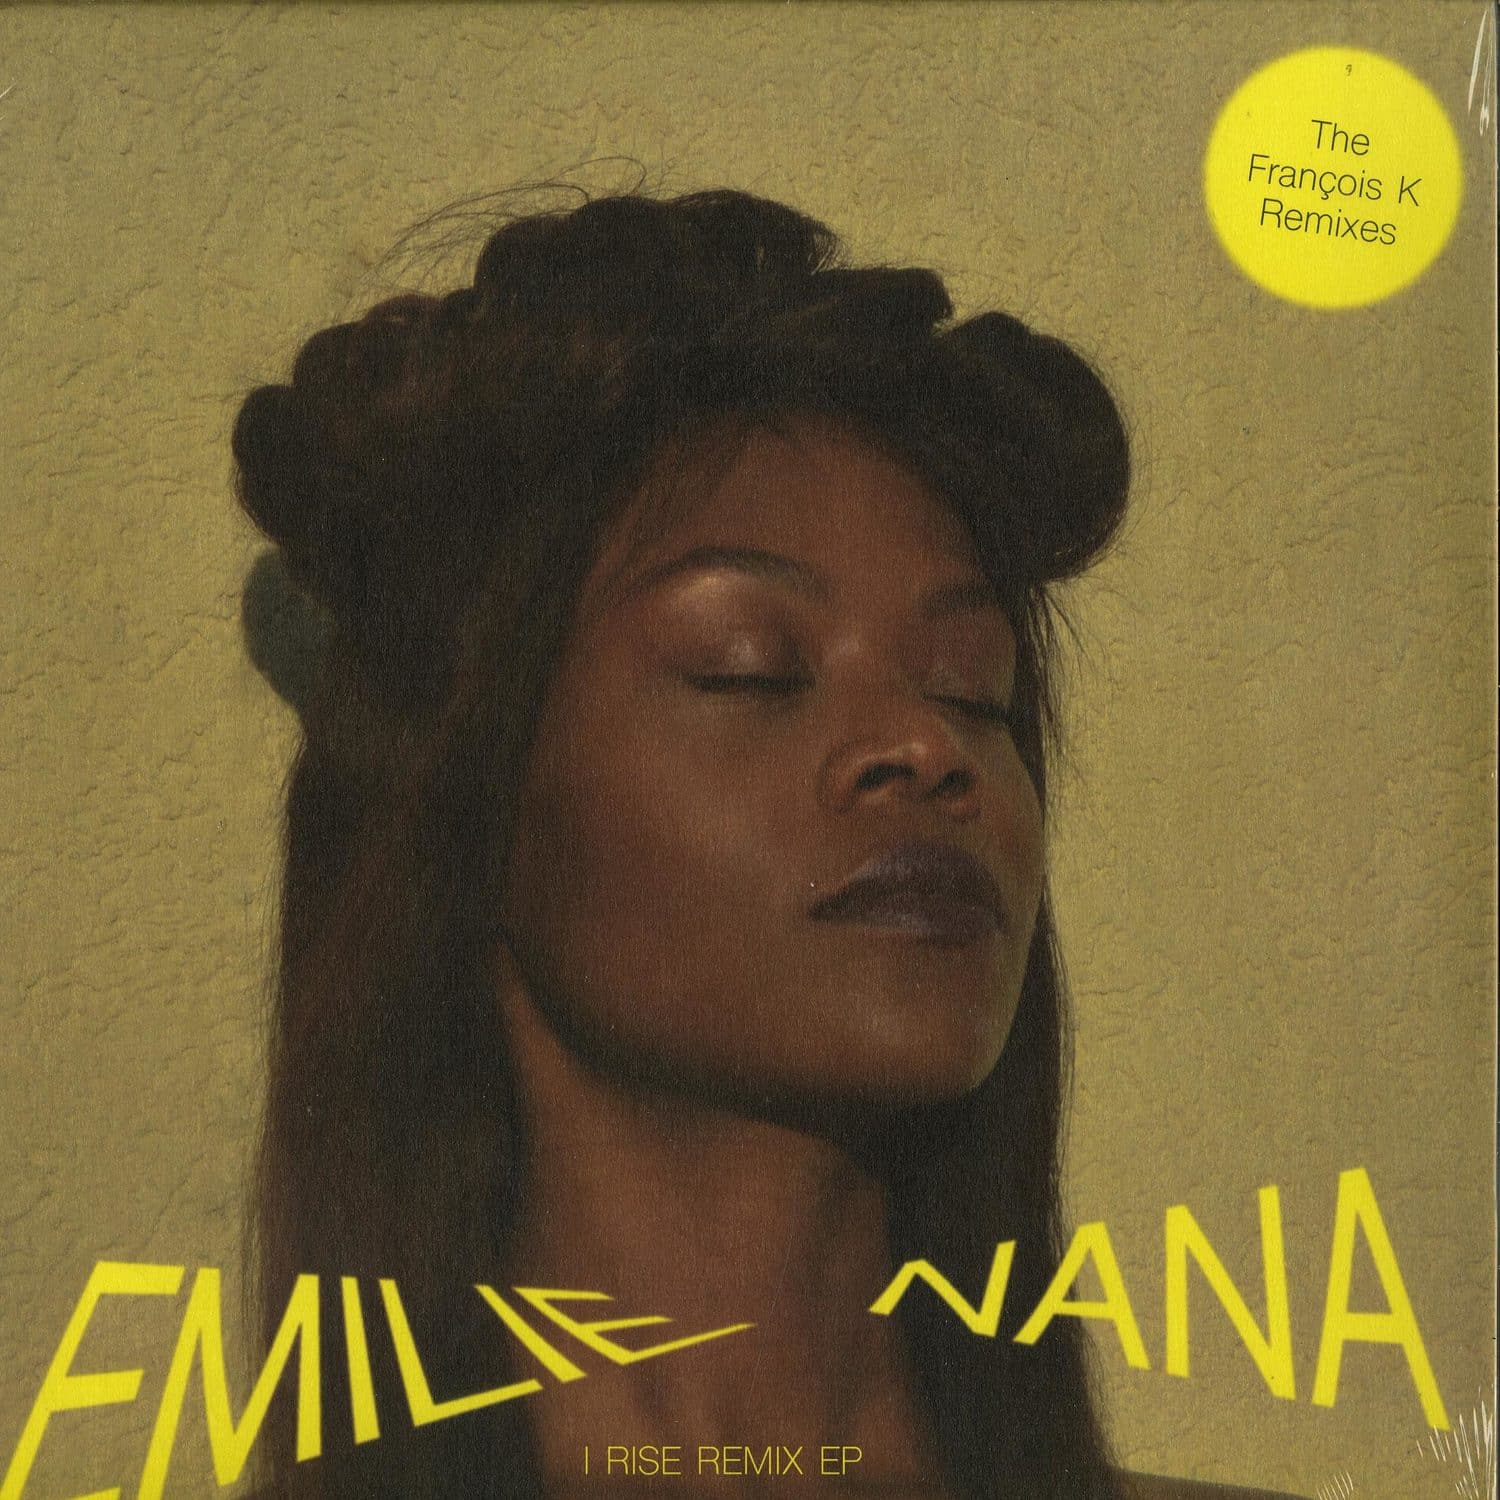 Emilie Nana - I RISE REMIX EP 